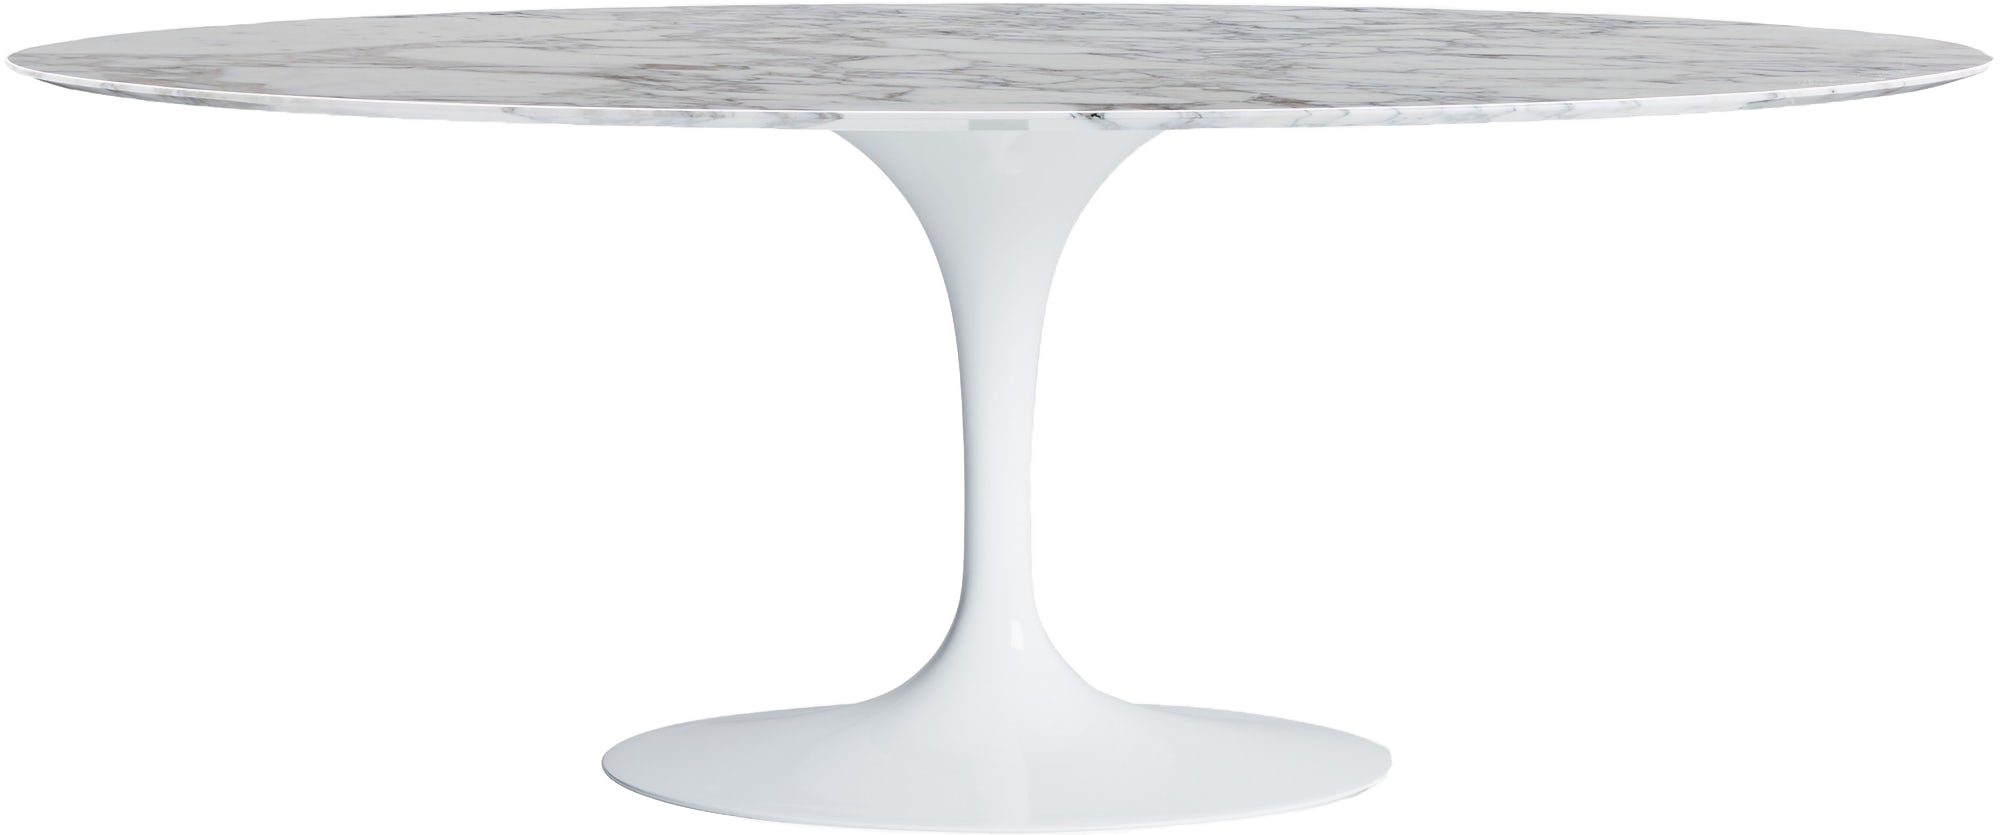 Saarinen Dining Table - Design Within Reach